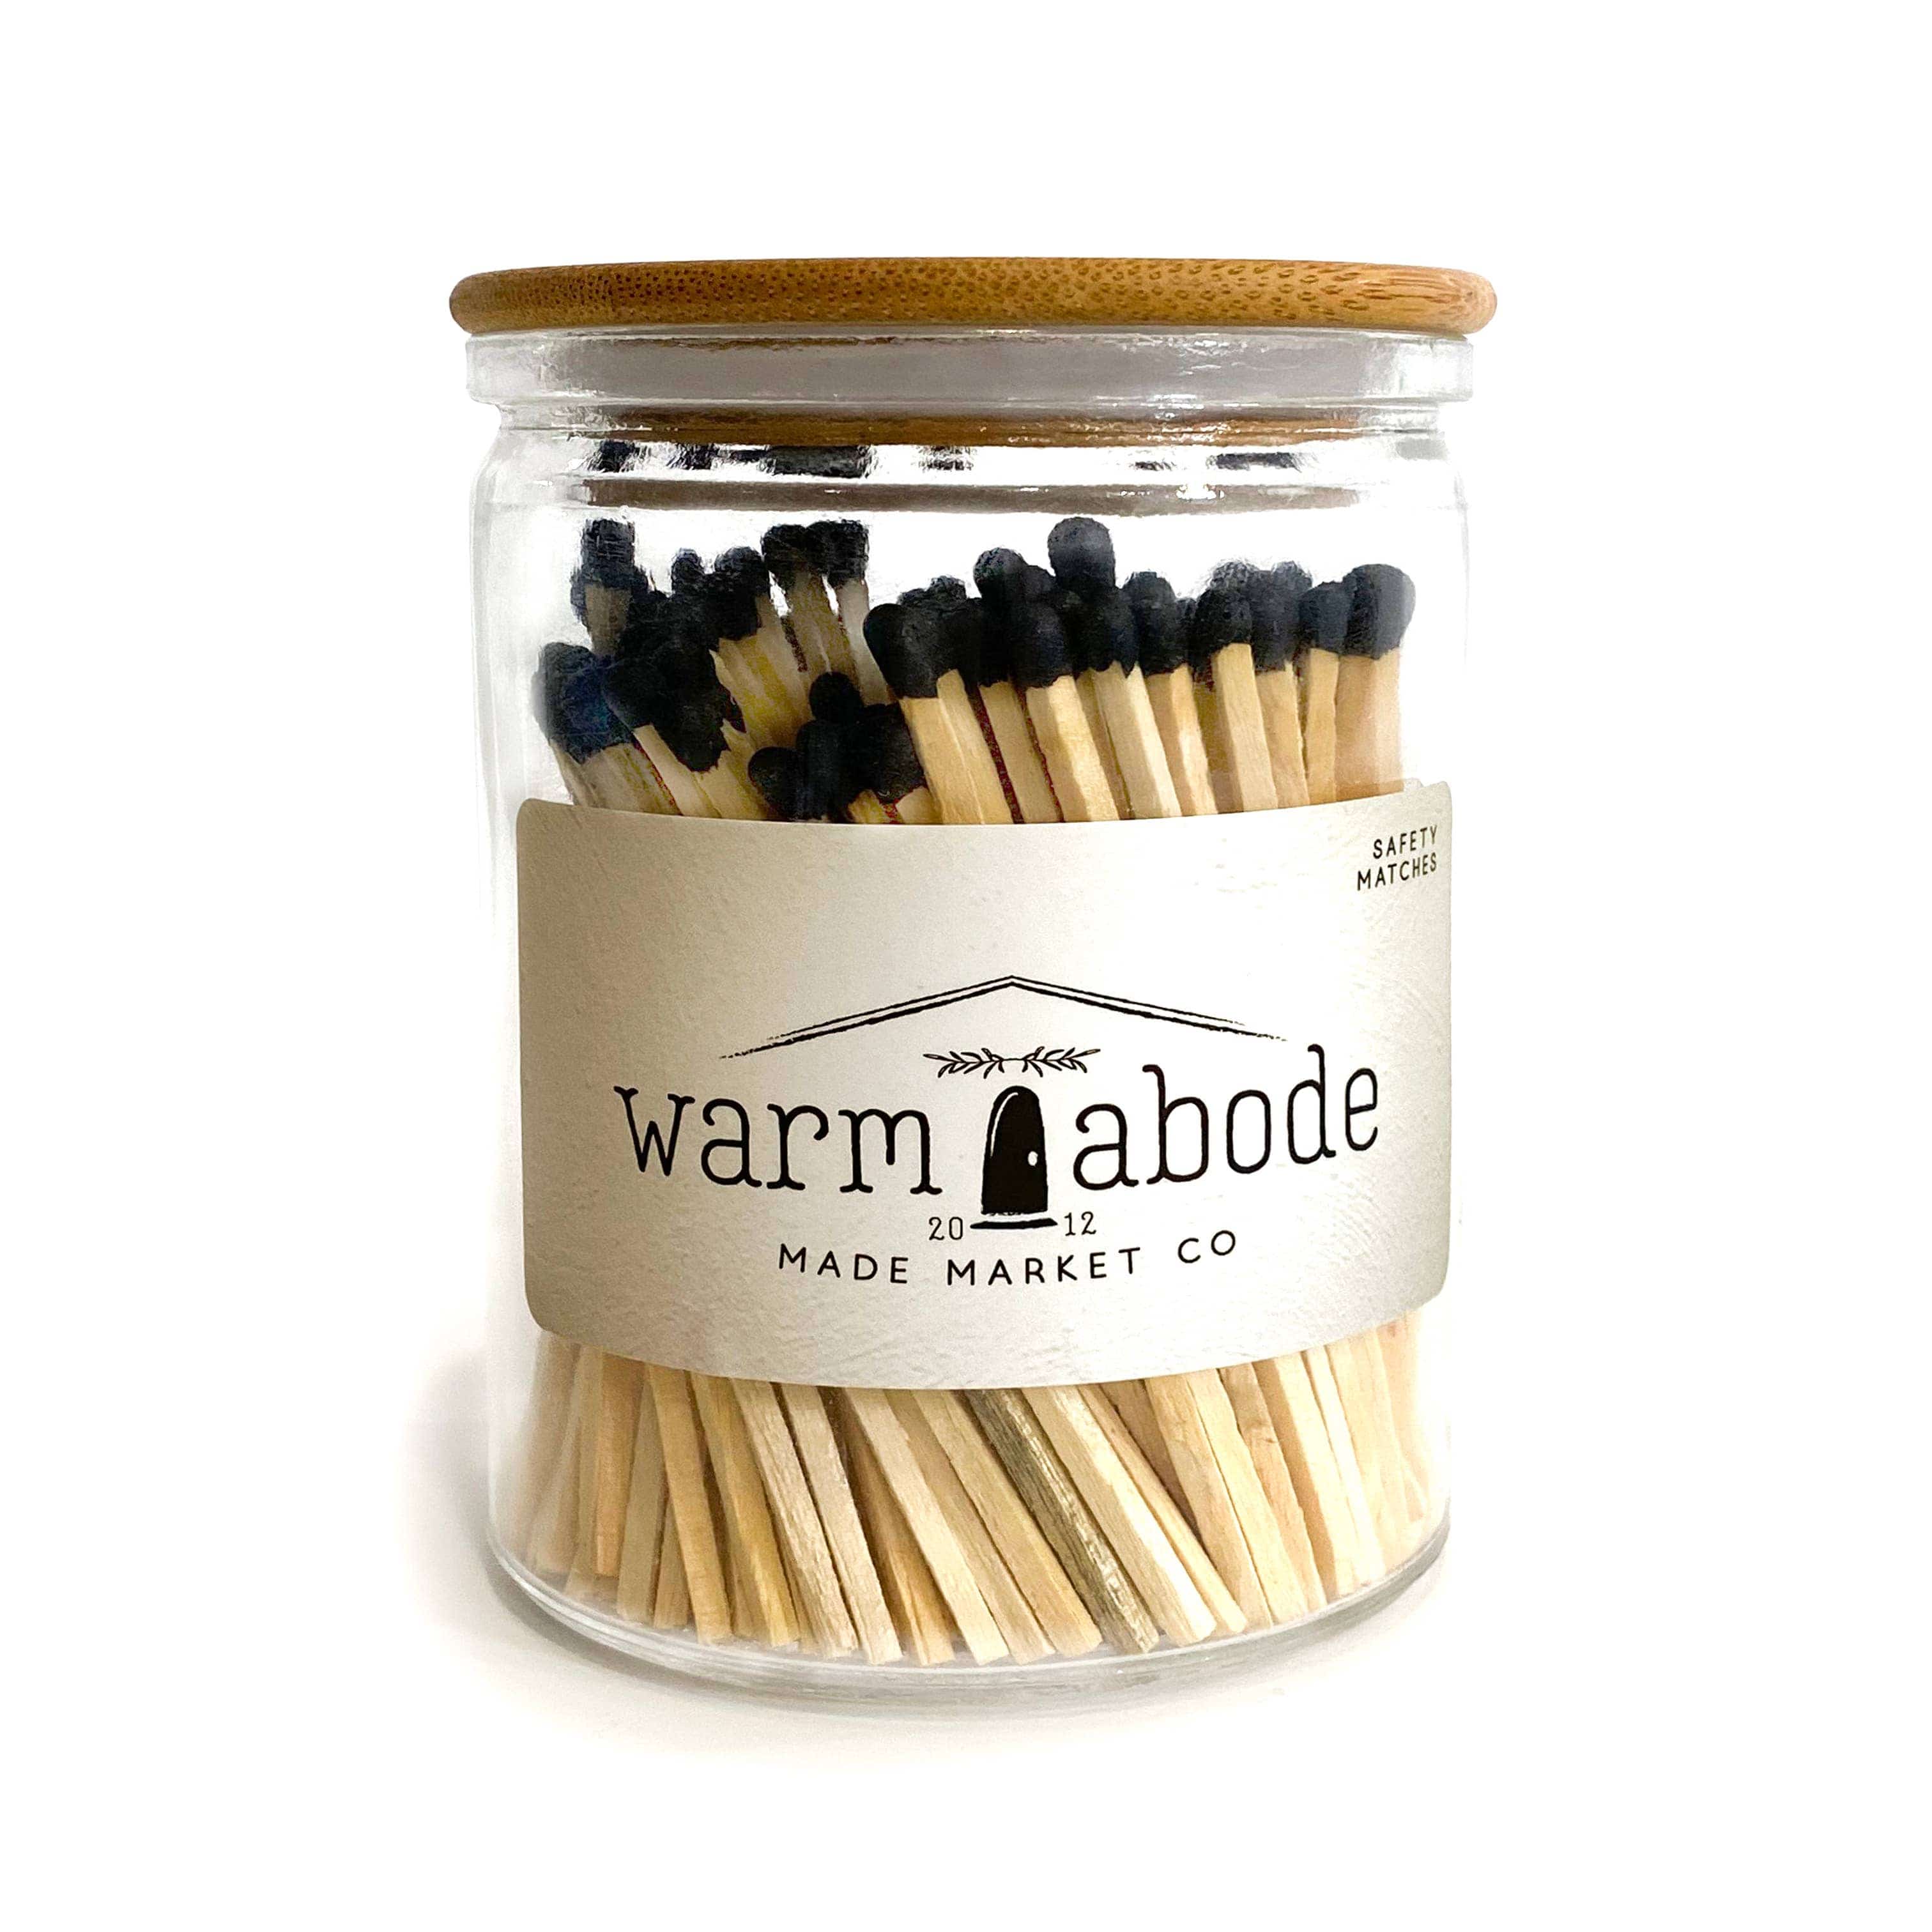 Made Market Co. Matches default Warm Abode Black Matches